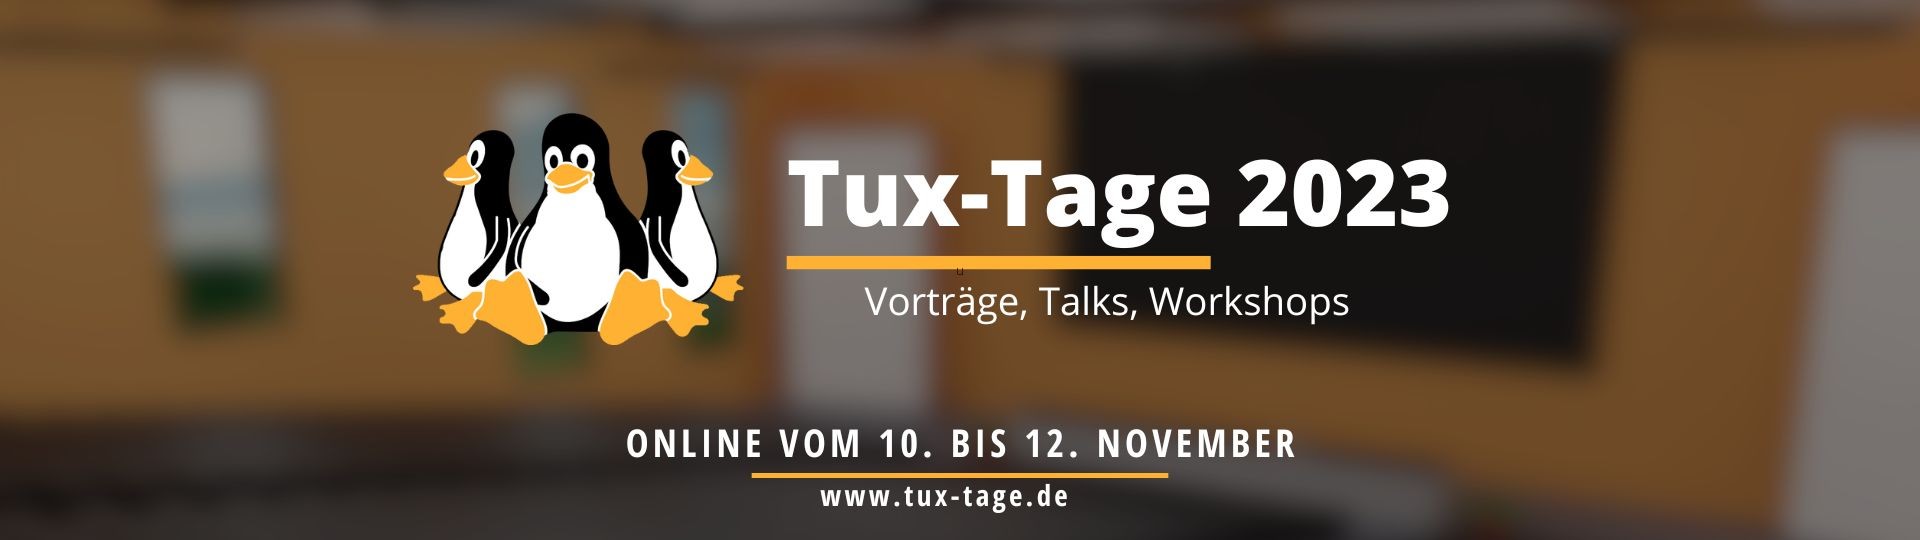 Banner der Tux-Tage 2023, Text: Tux-Tage 2023, Vorträge, Talks, Workshops, Online vom 10. bis 12. November, www.tux-tage.de